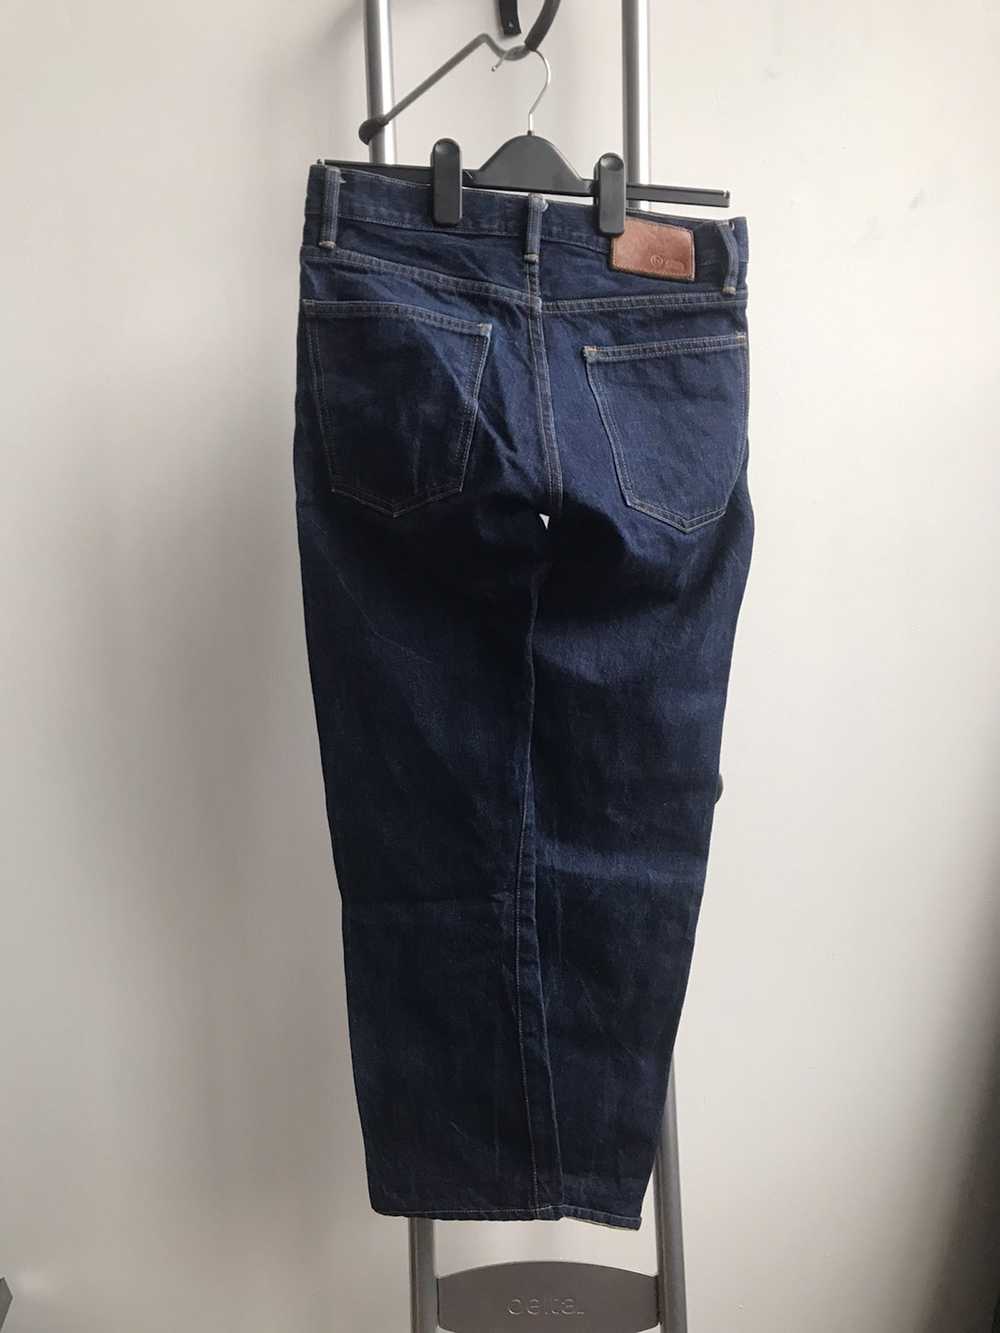 Taylor Stitch Selvedge Denim Jeans 30x32 - image 7